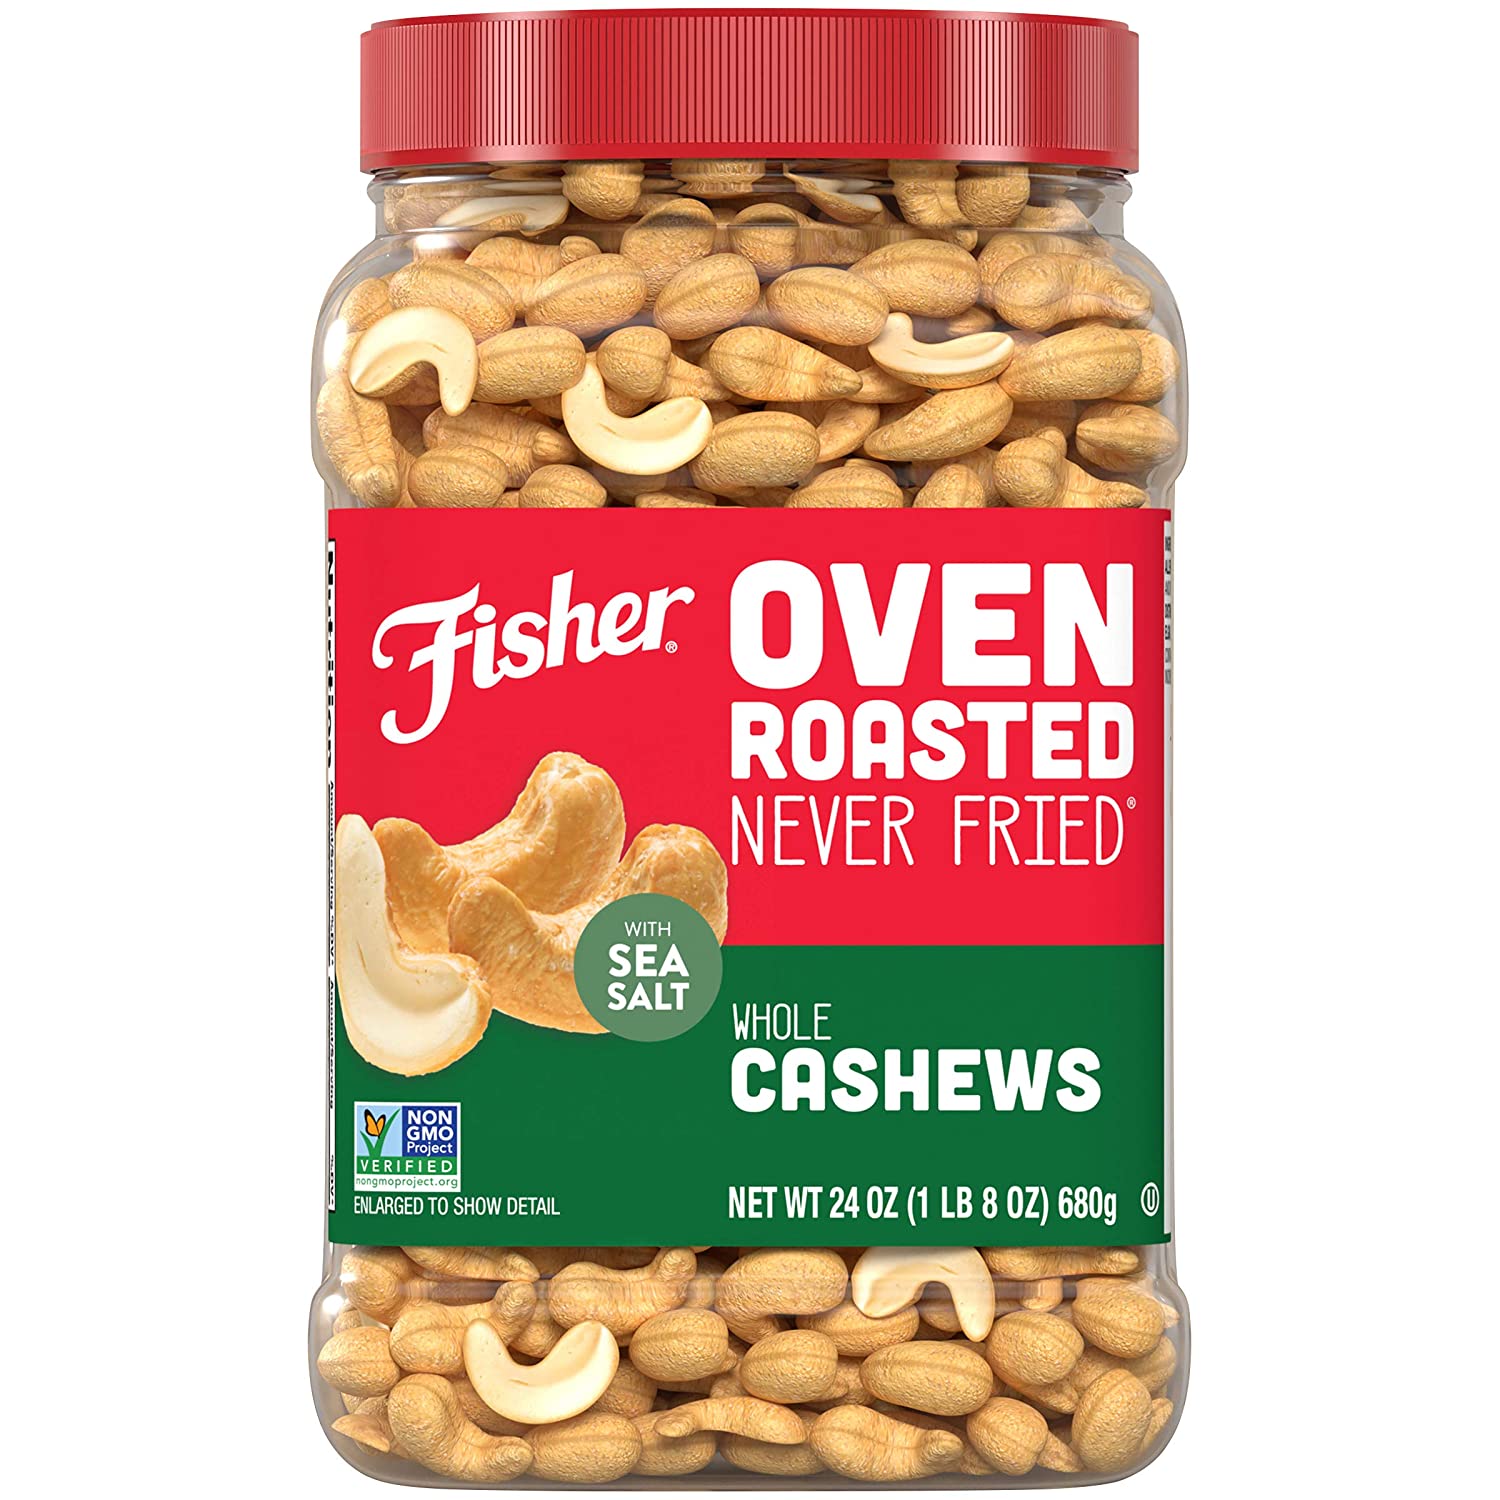 Fisher Oven Roasted No Preservatives Cashews